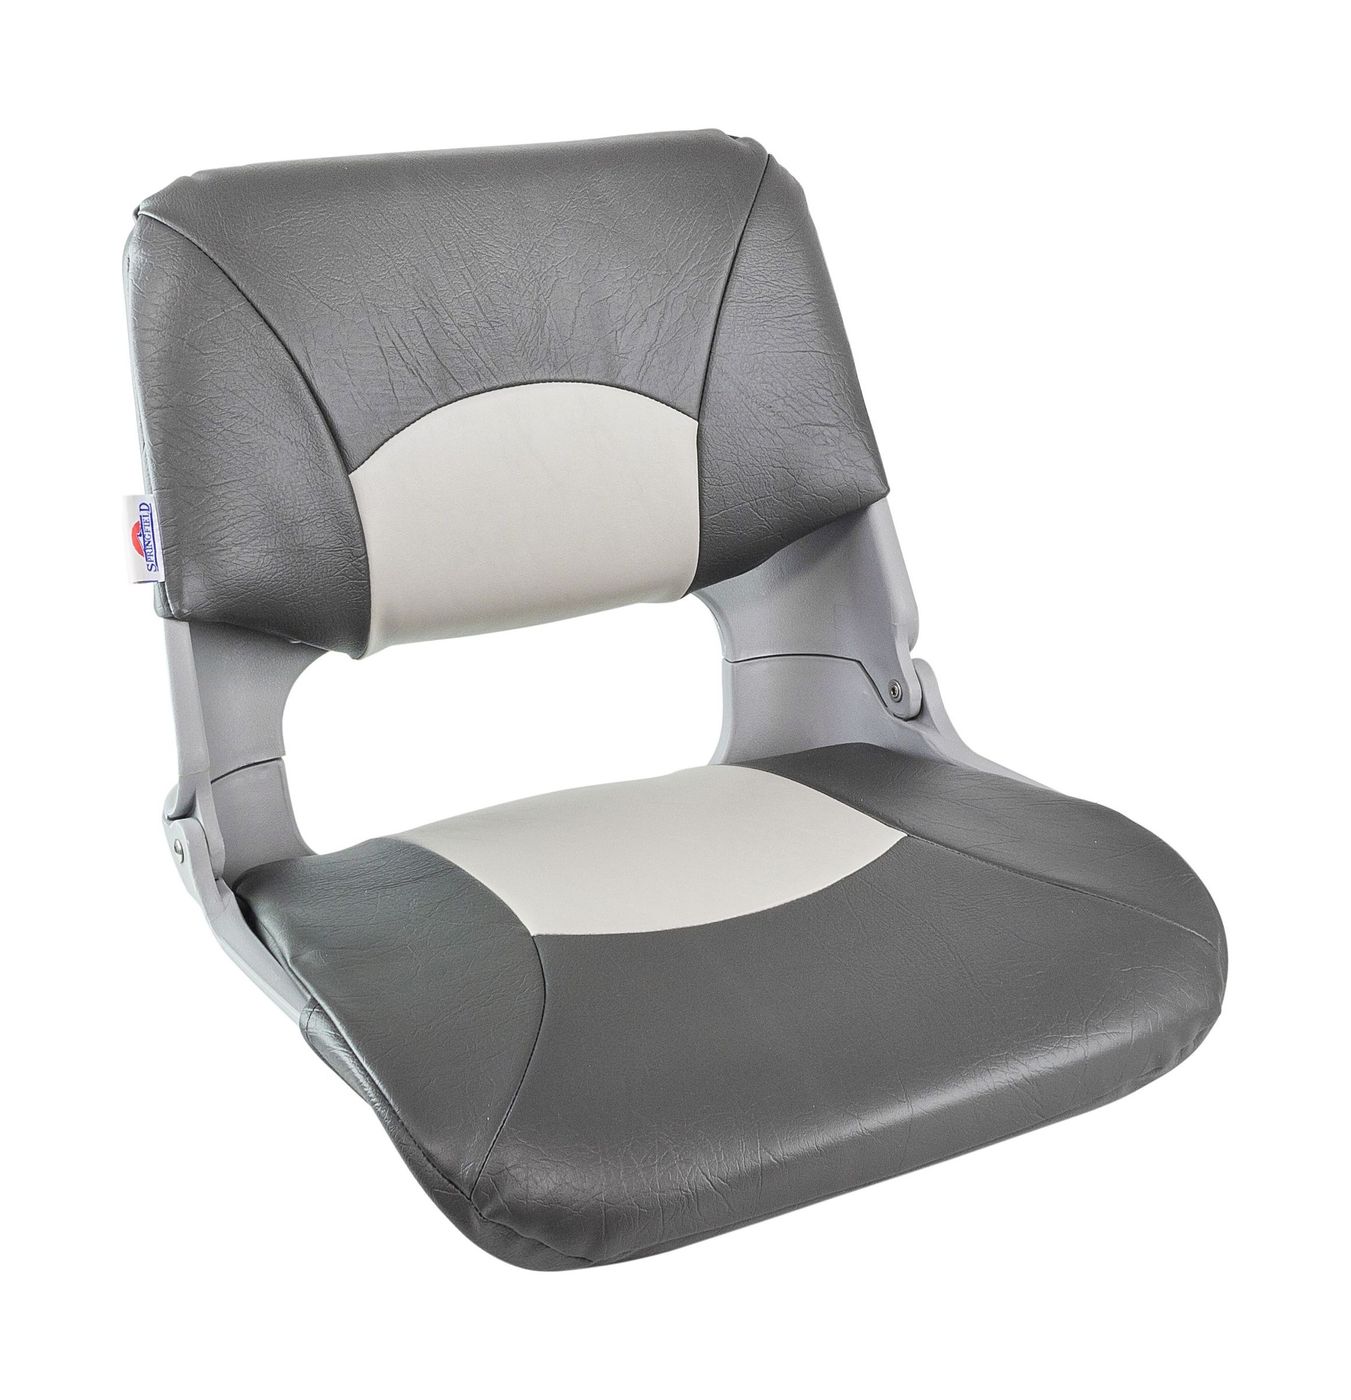 Кресло складное мягкое SKIPPER, серый/темно-серый 1061017 кресло skipper premium с высокой спинкой серый темно серый 1061067